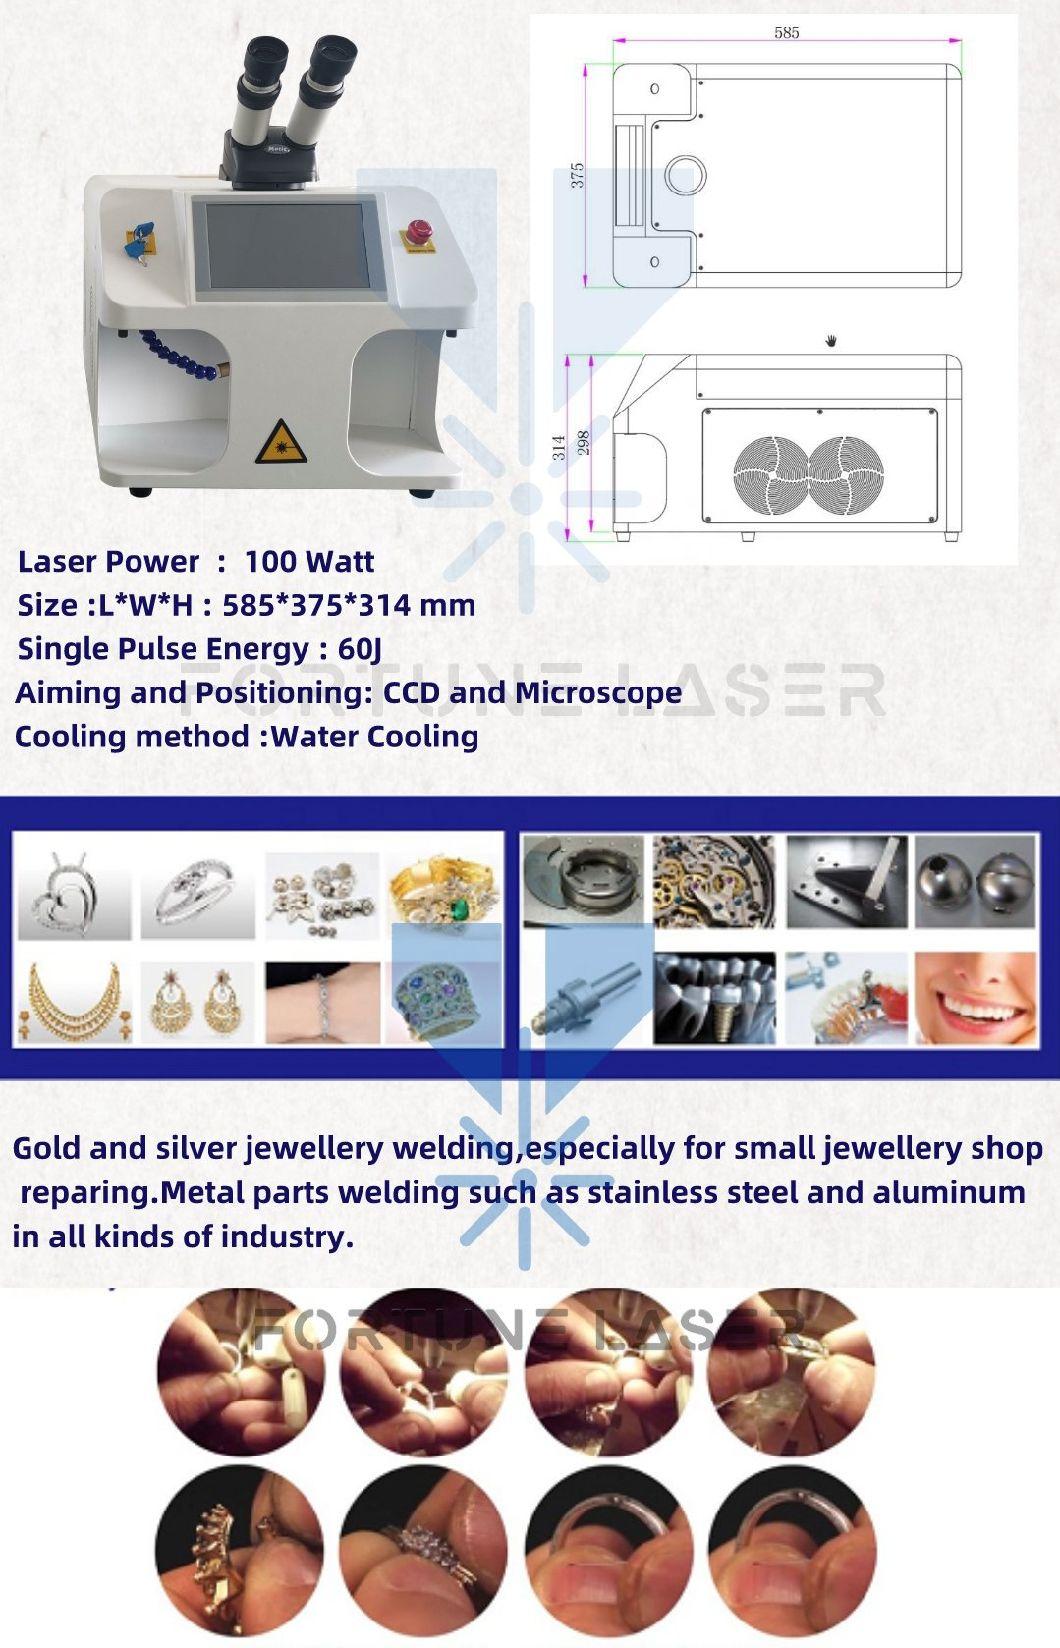 Fortune Laser Gold Jewelry Laser Welding Machine Price for Metal Glasses Frame Mold Mini Laser Welder